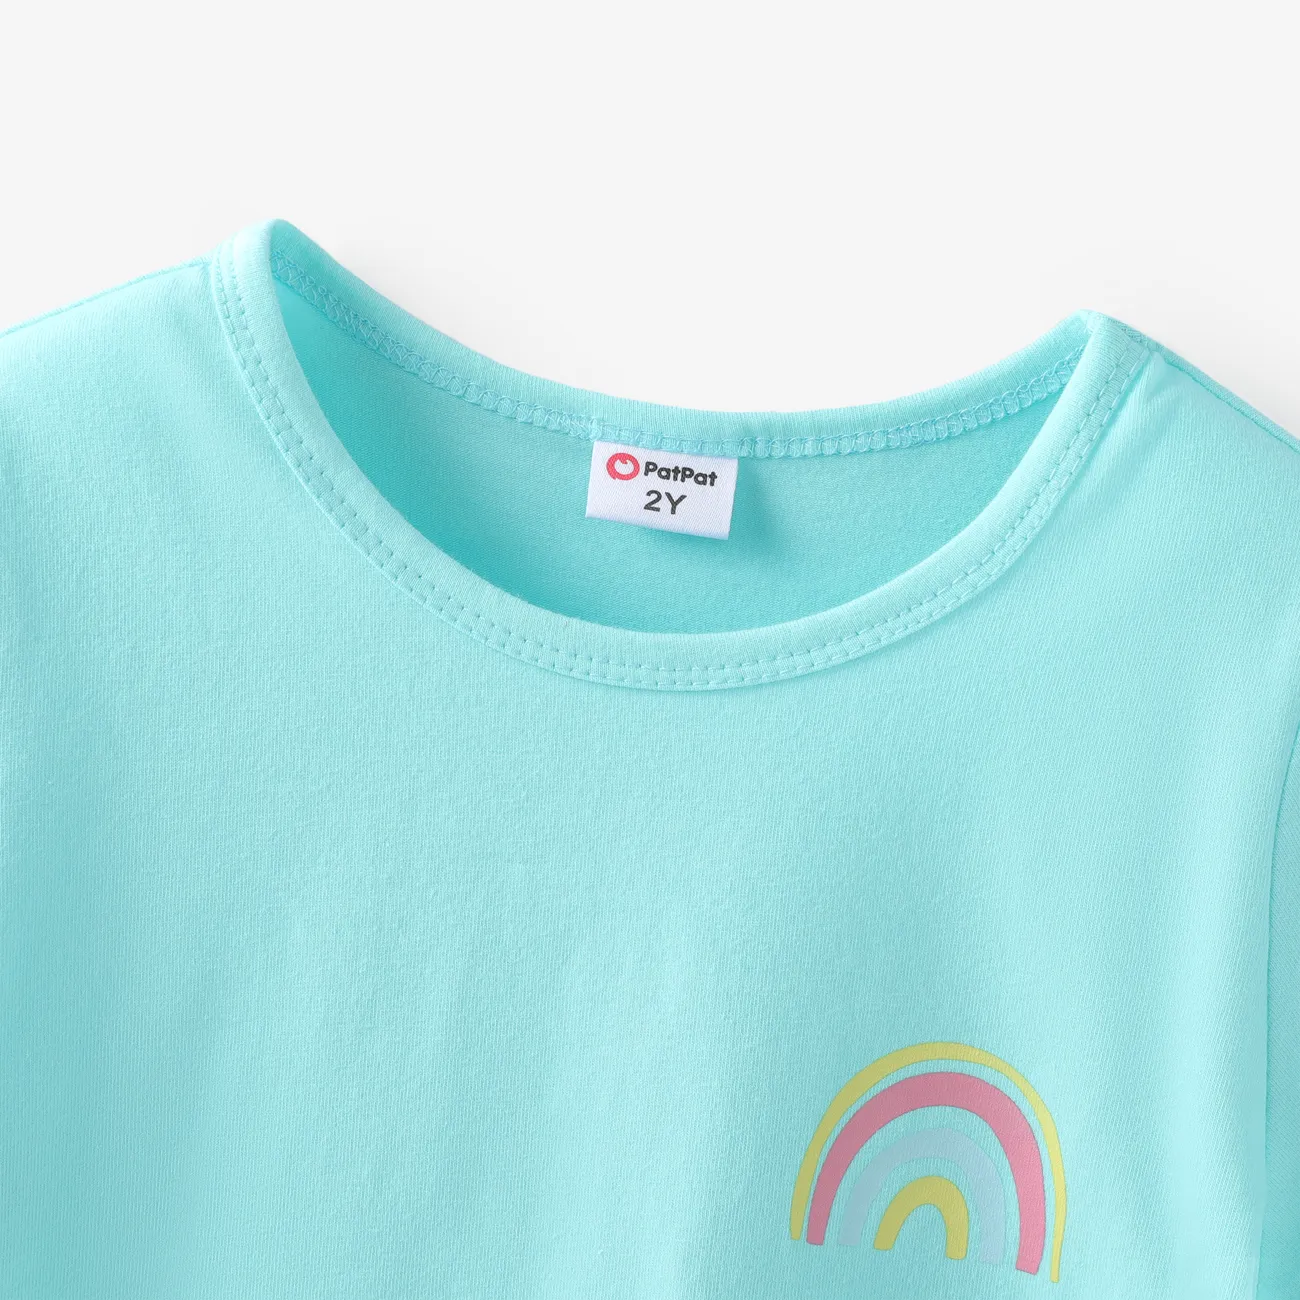 Toddler Boy/Girl 2pcs Rainbow Print Tee and Shorts Set Green big image 1